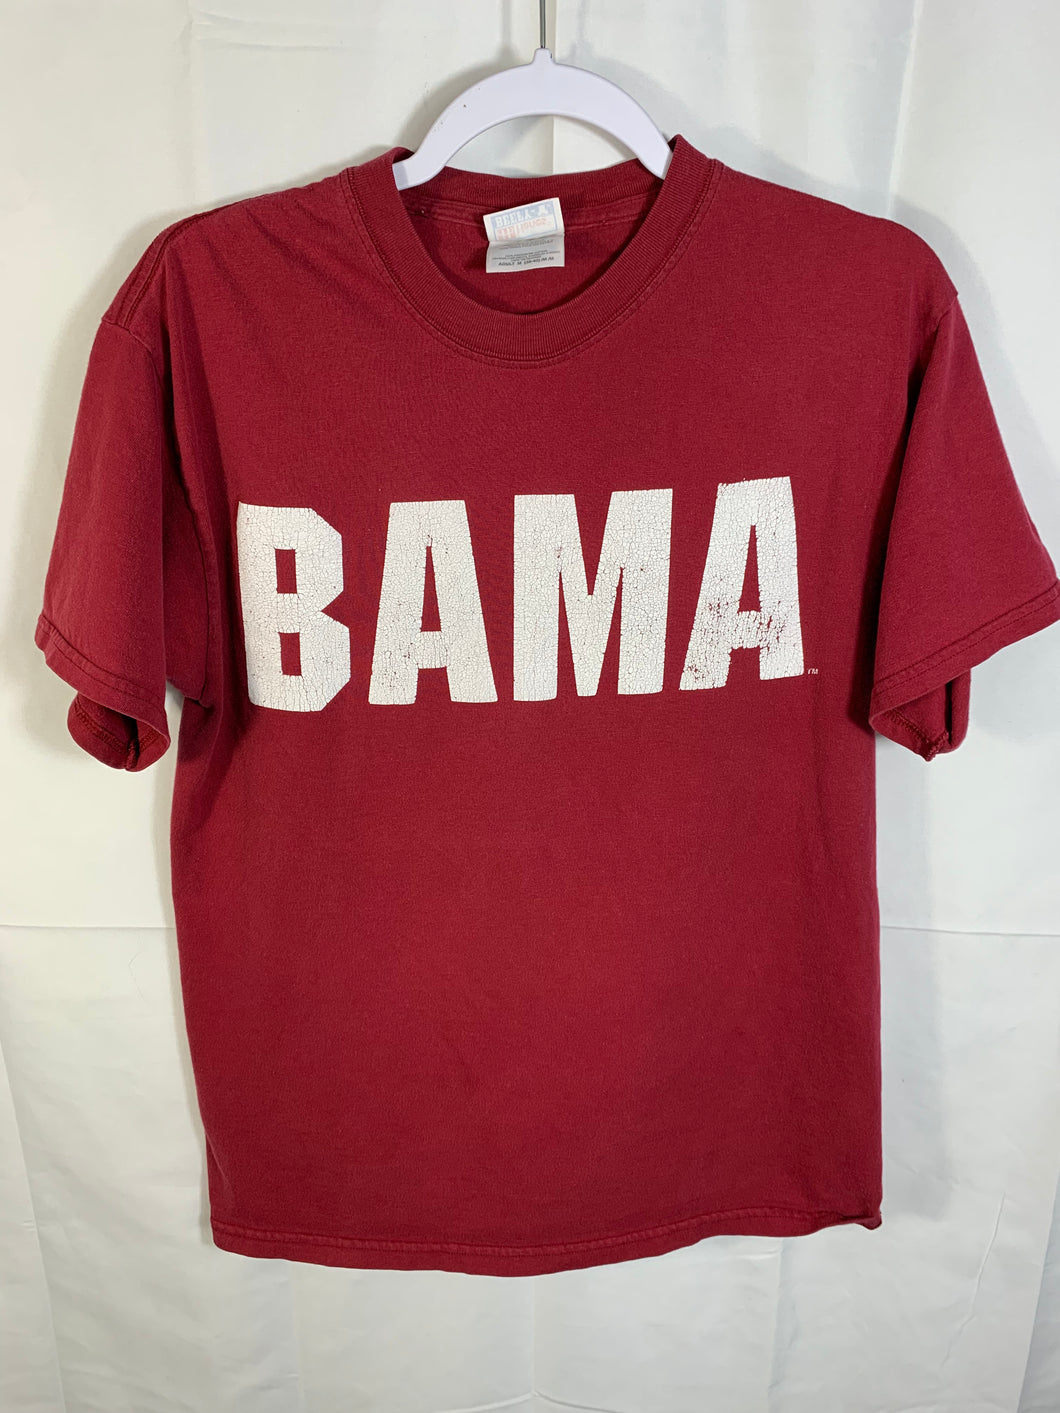 Vintage Bama Spellout T-Shirt Medium